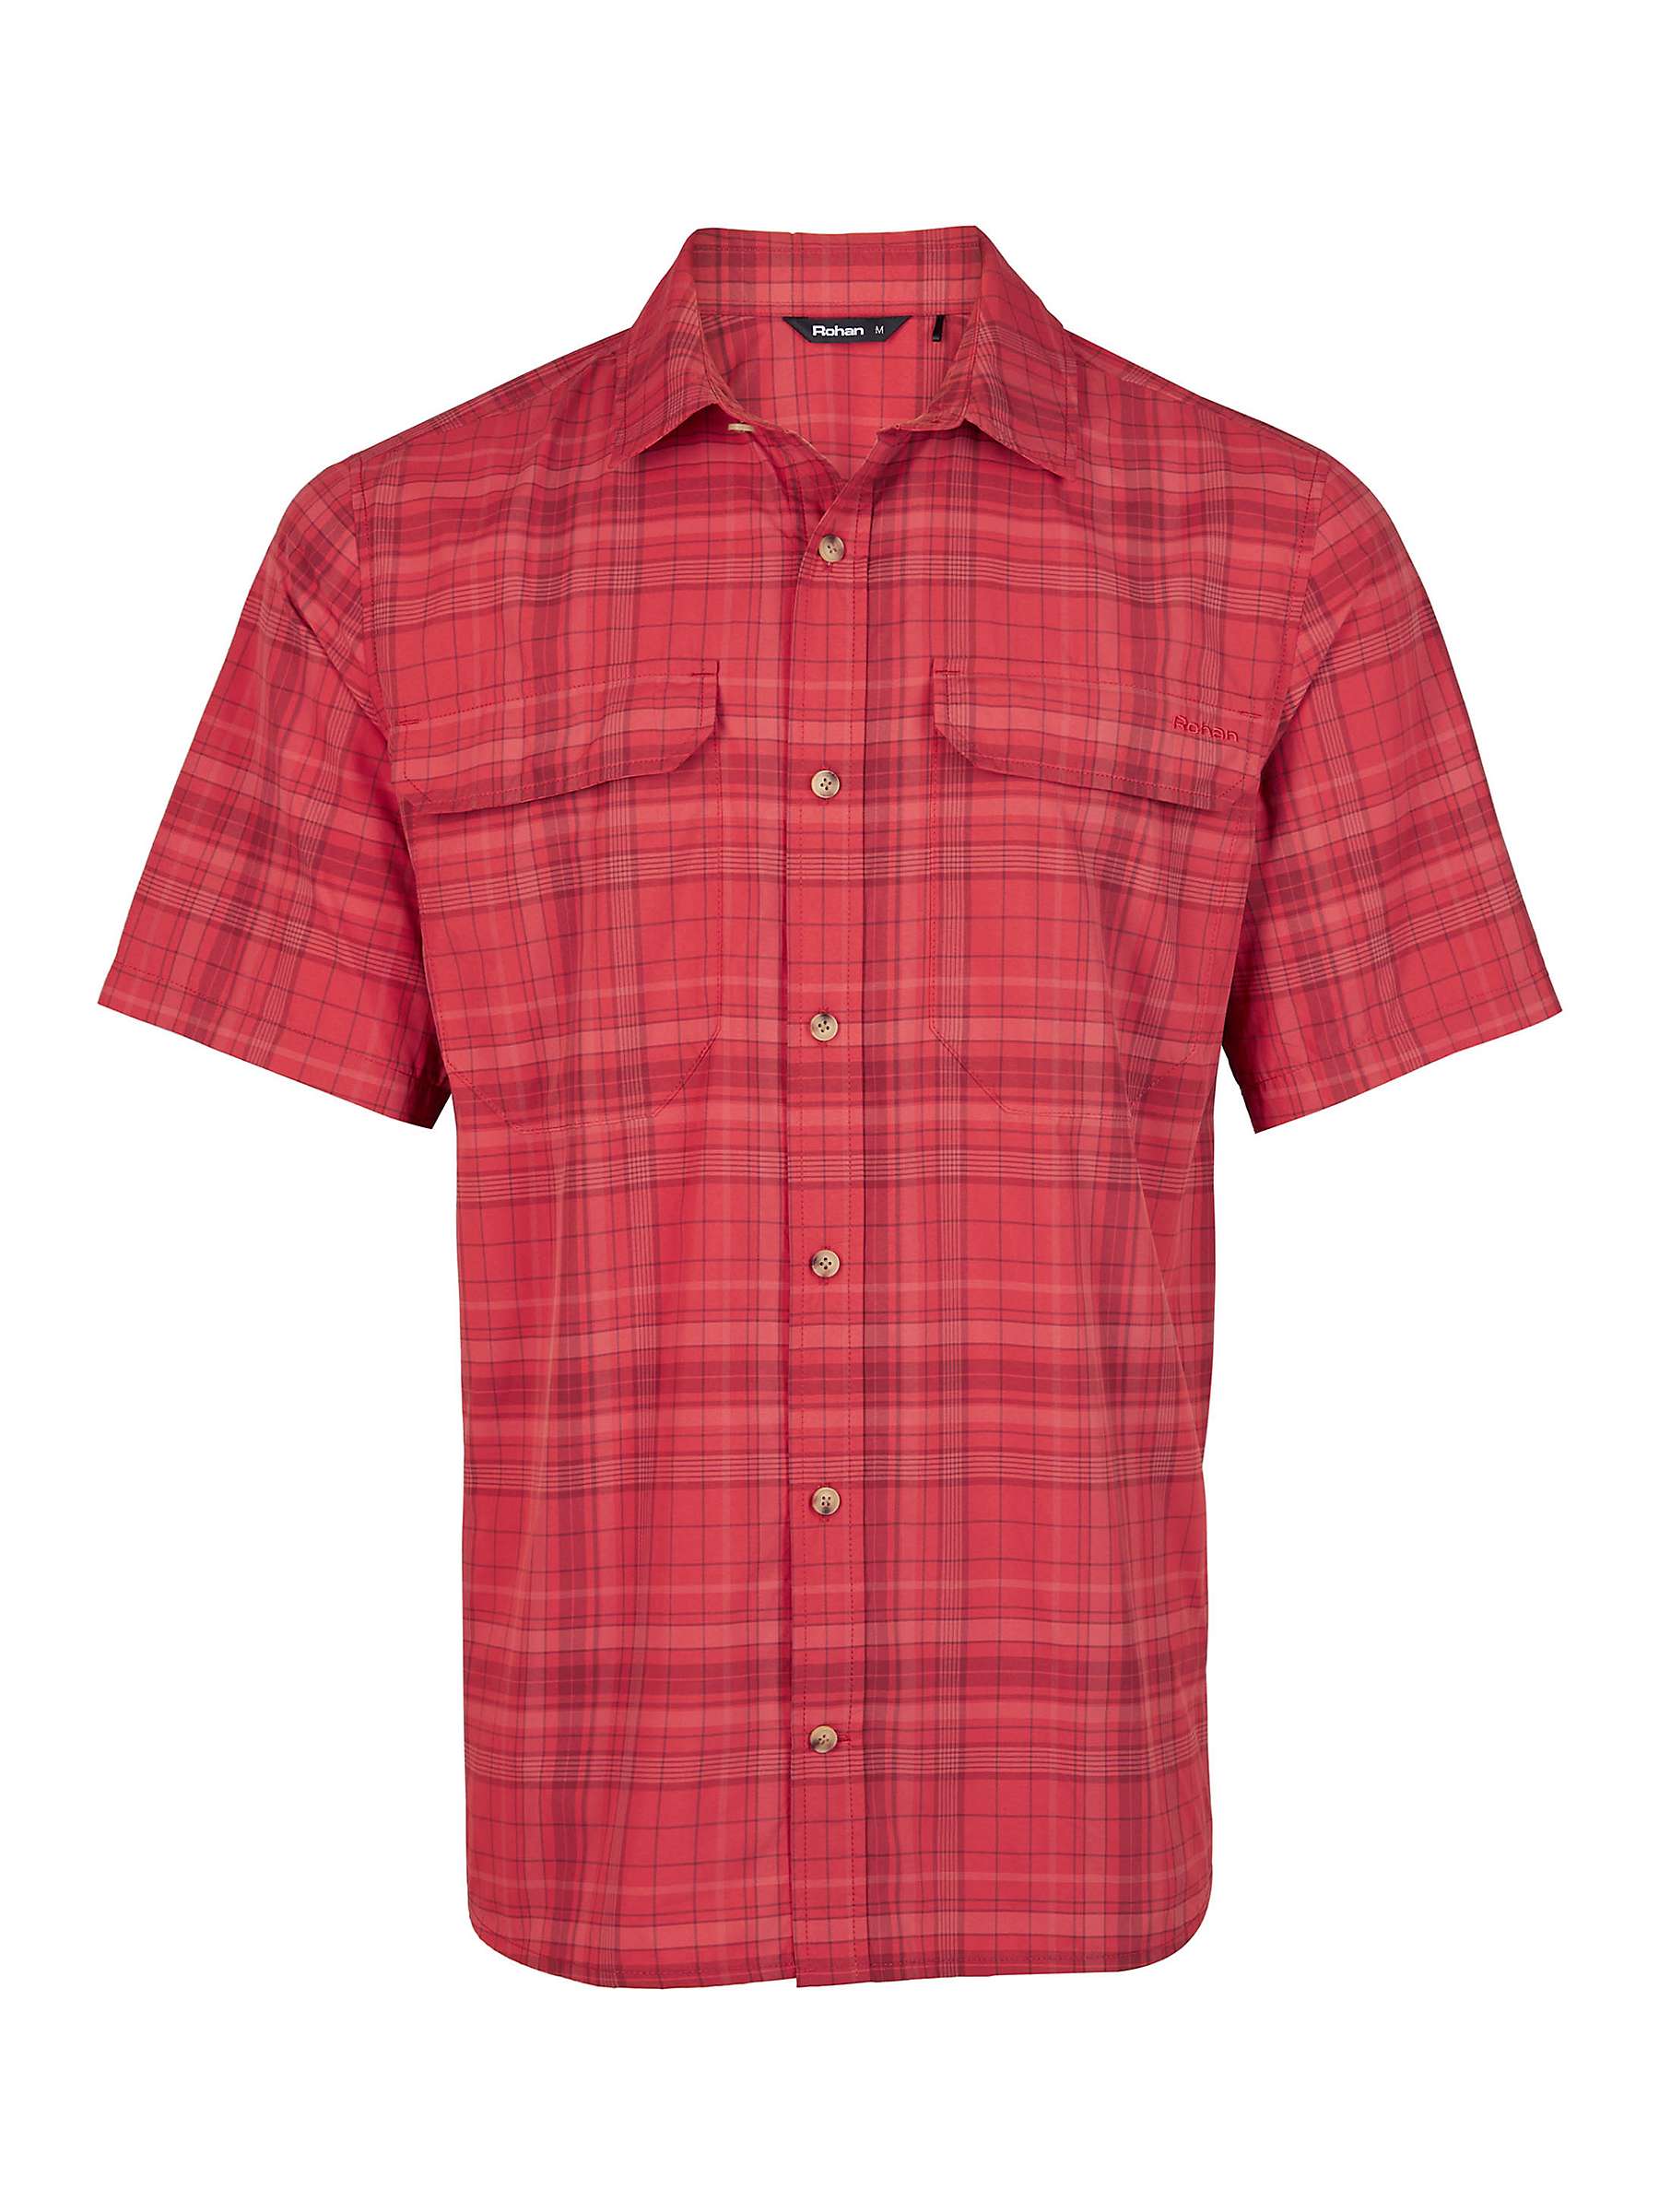 Rohan Pennine Short Sleeve Check Shirt, Coast Red at John Lewis & Partners